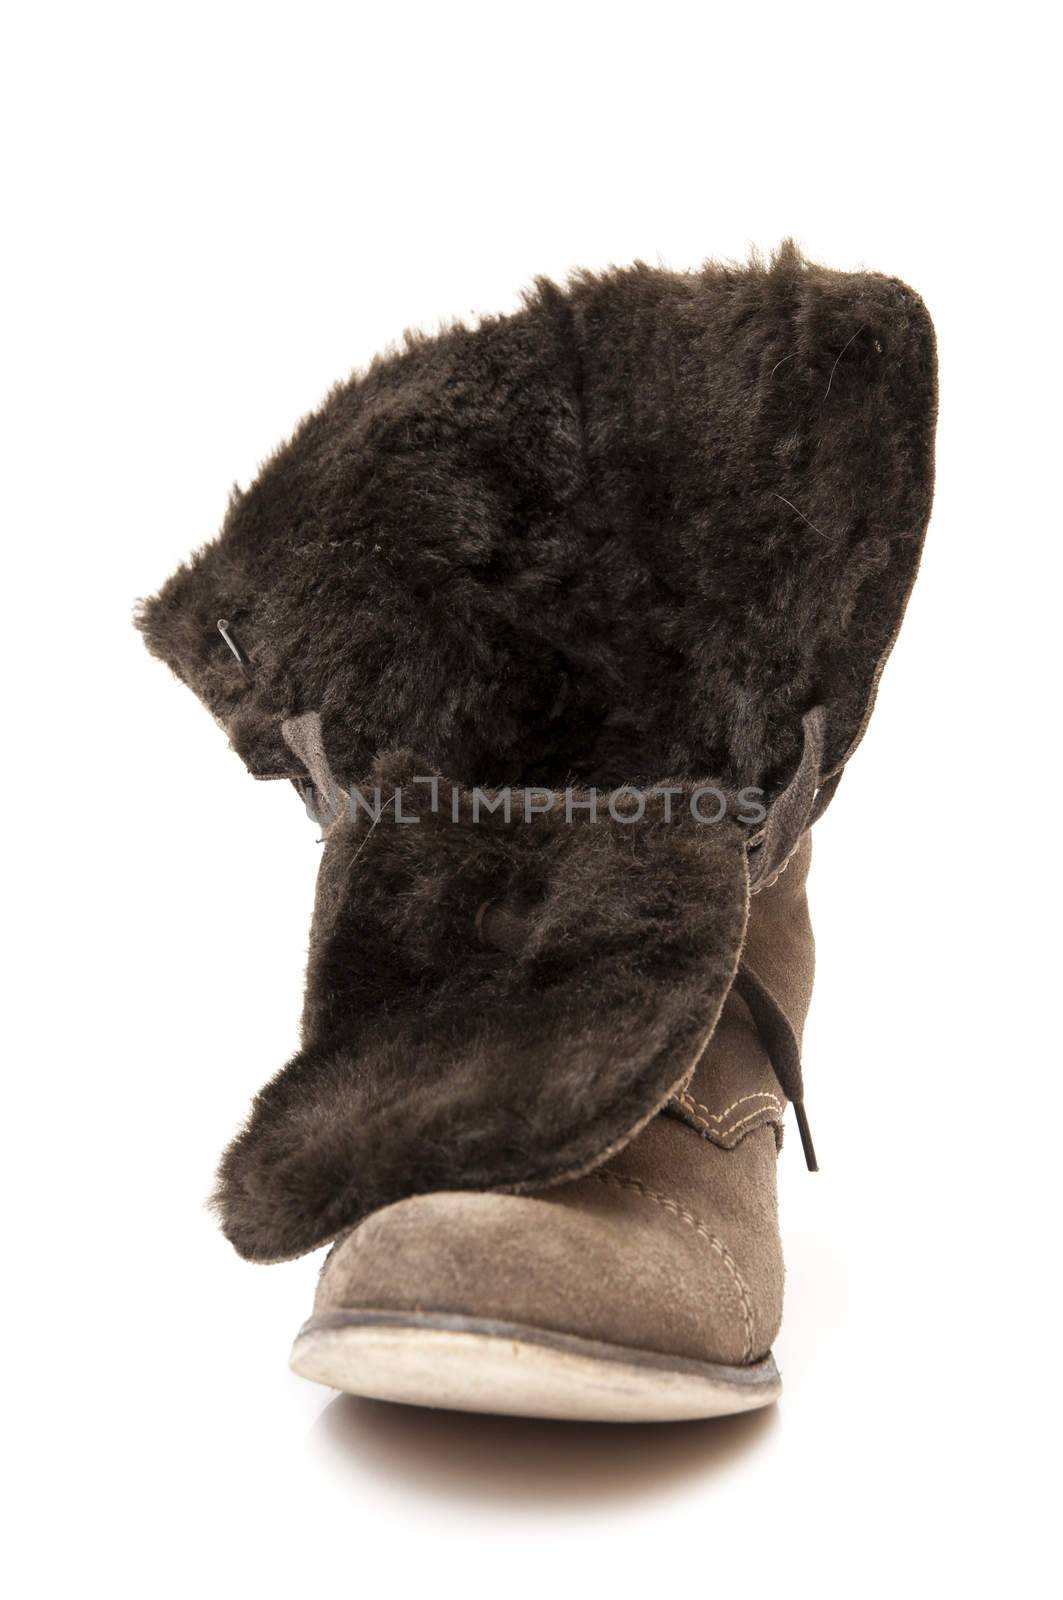 winter boots by arnau2098